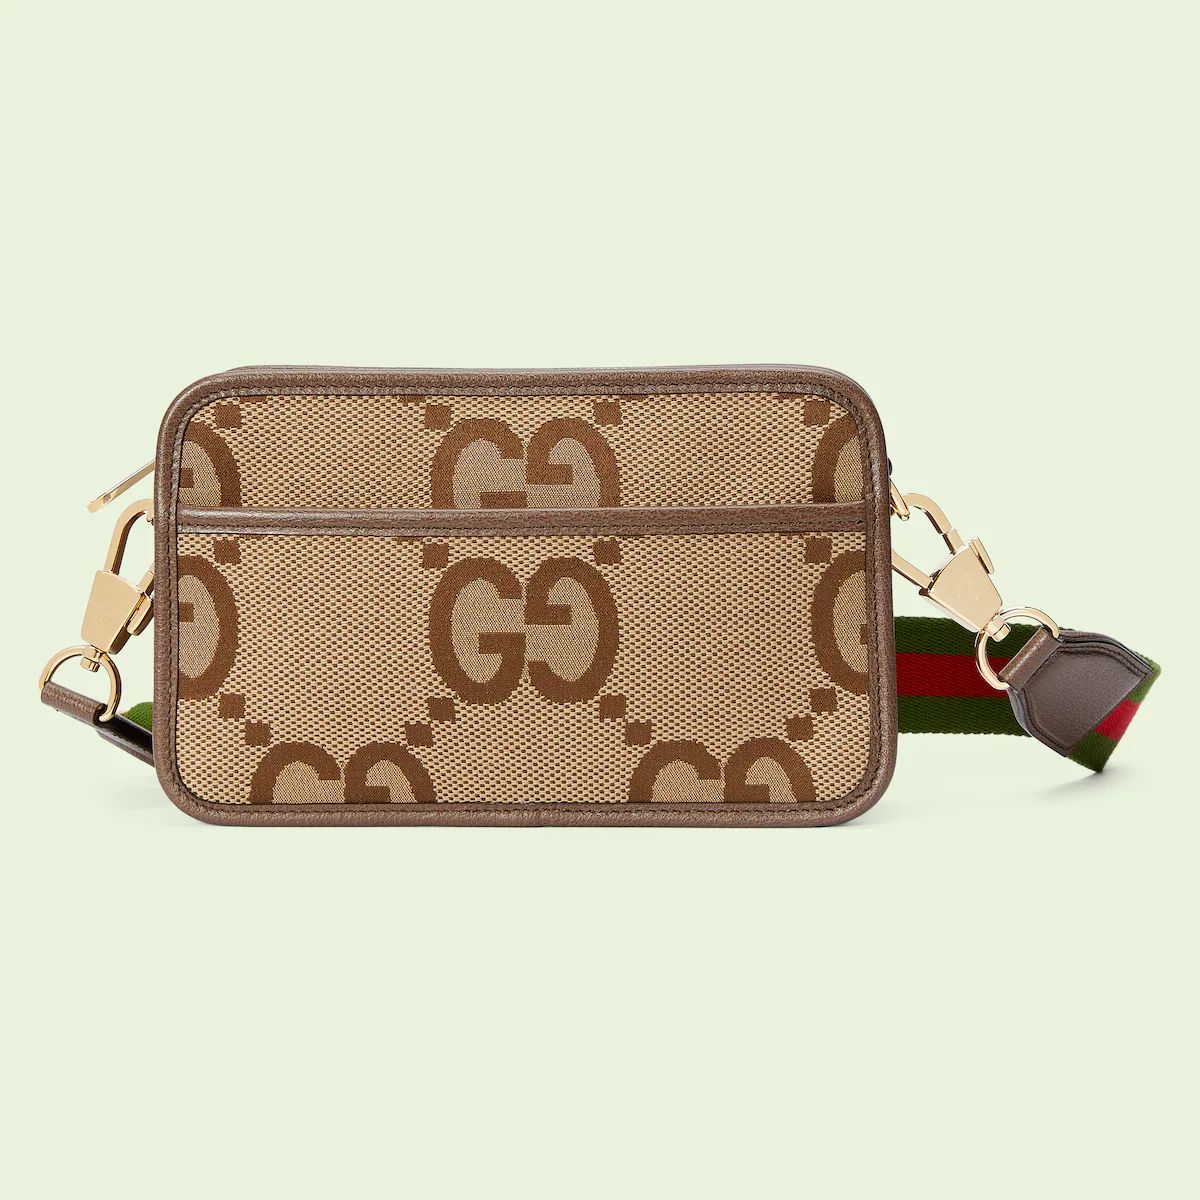 Jumbo GG mini bag | Gucci (US)